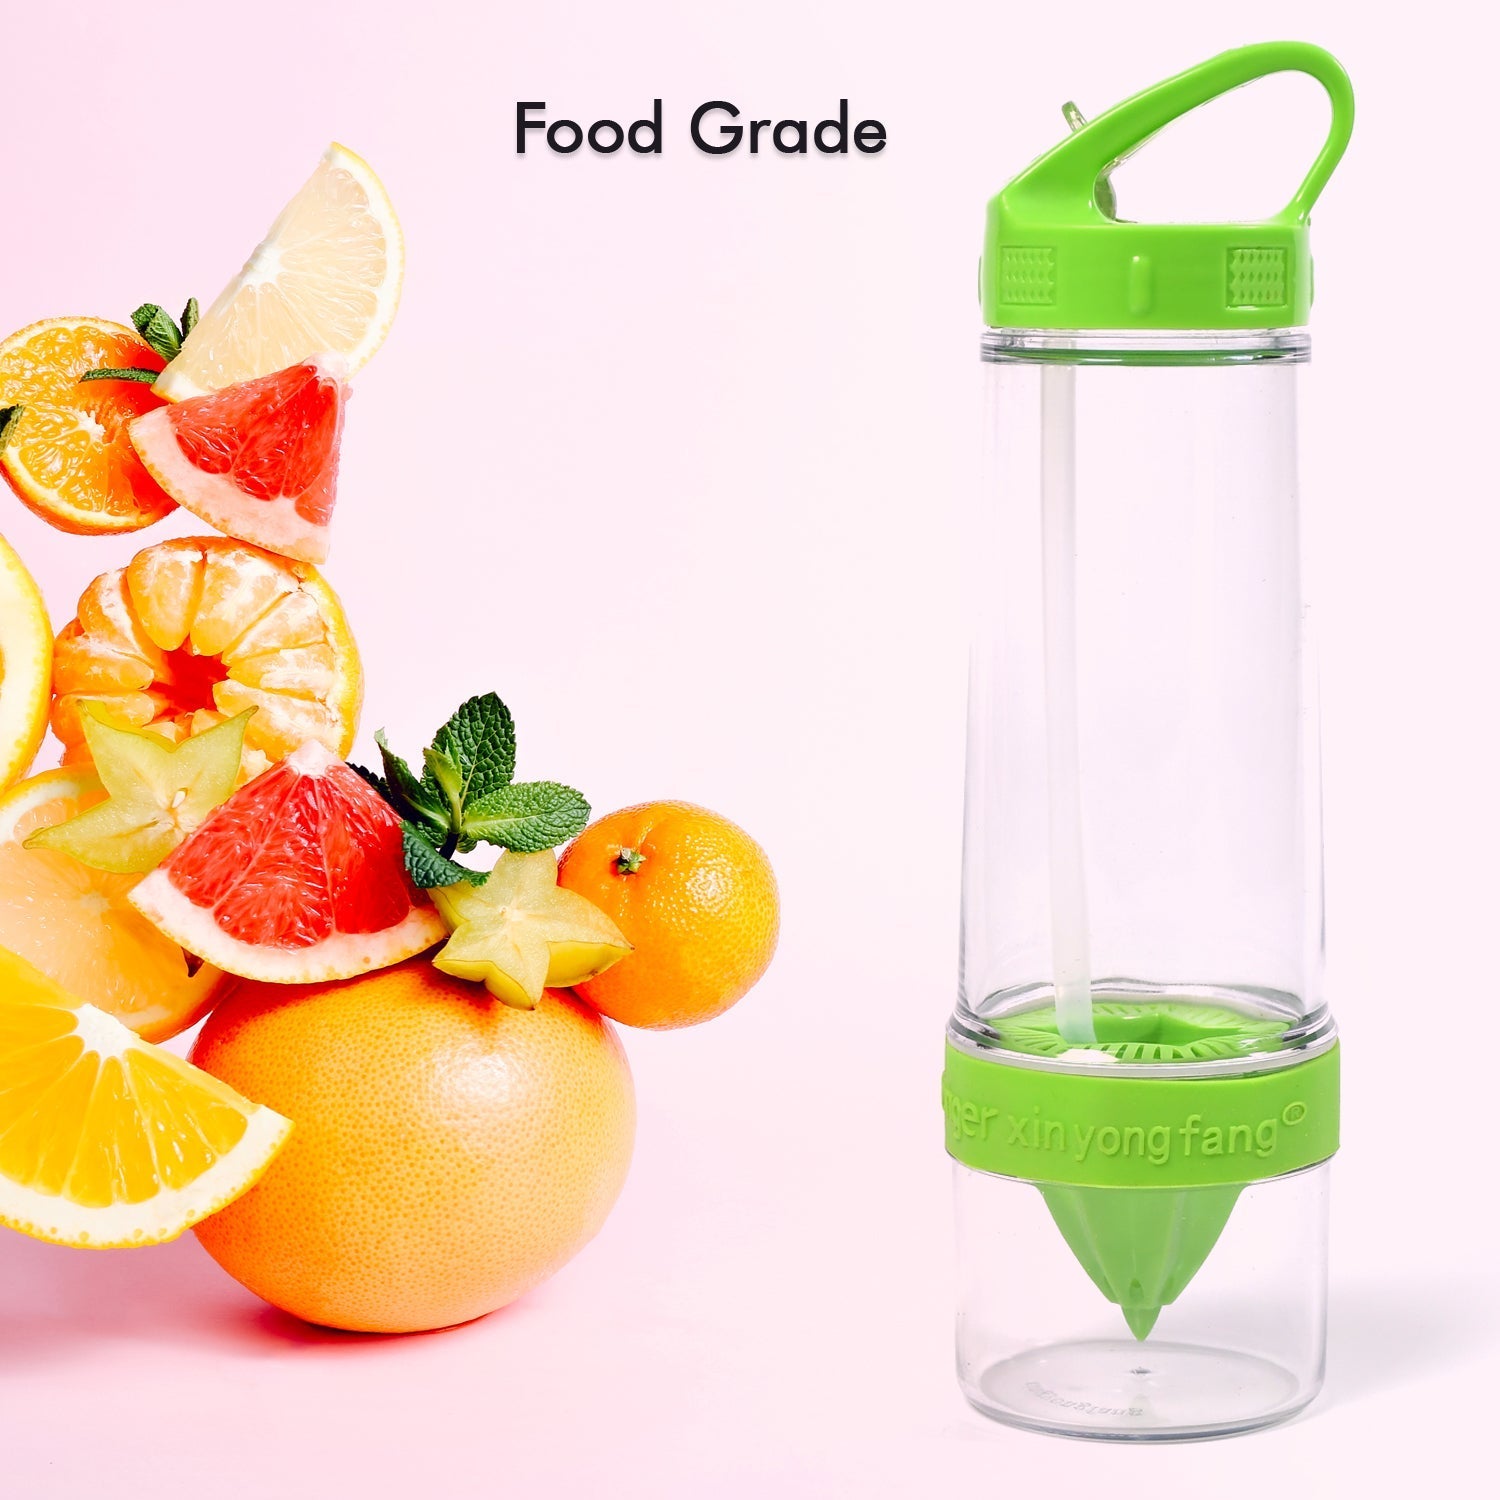 2474 Citrus Zinger Sports Bottle with Juice Maker Infuser Bottle DeoDap